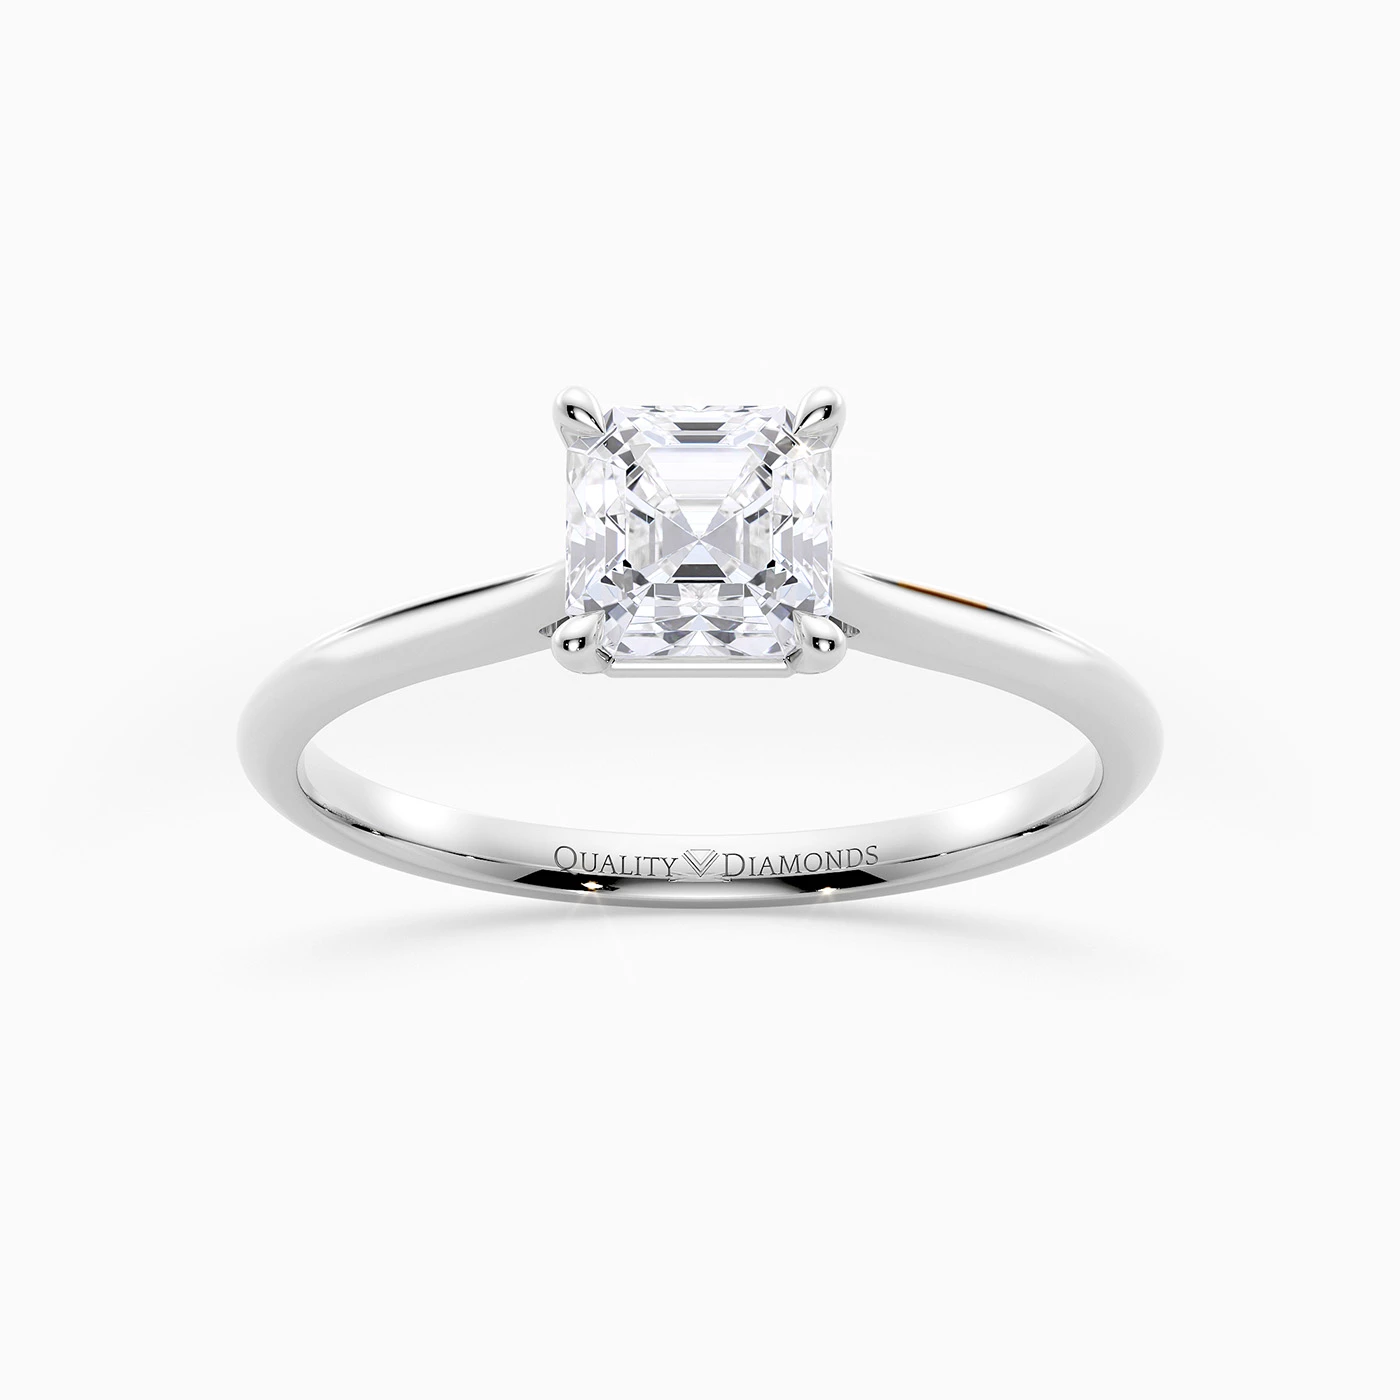 Asscher Carys Diamond Ring in Platinum